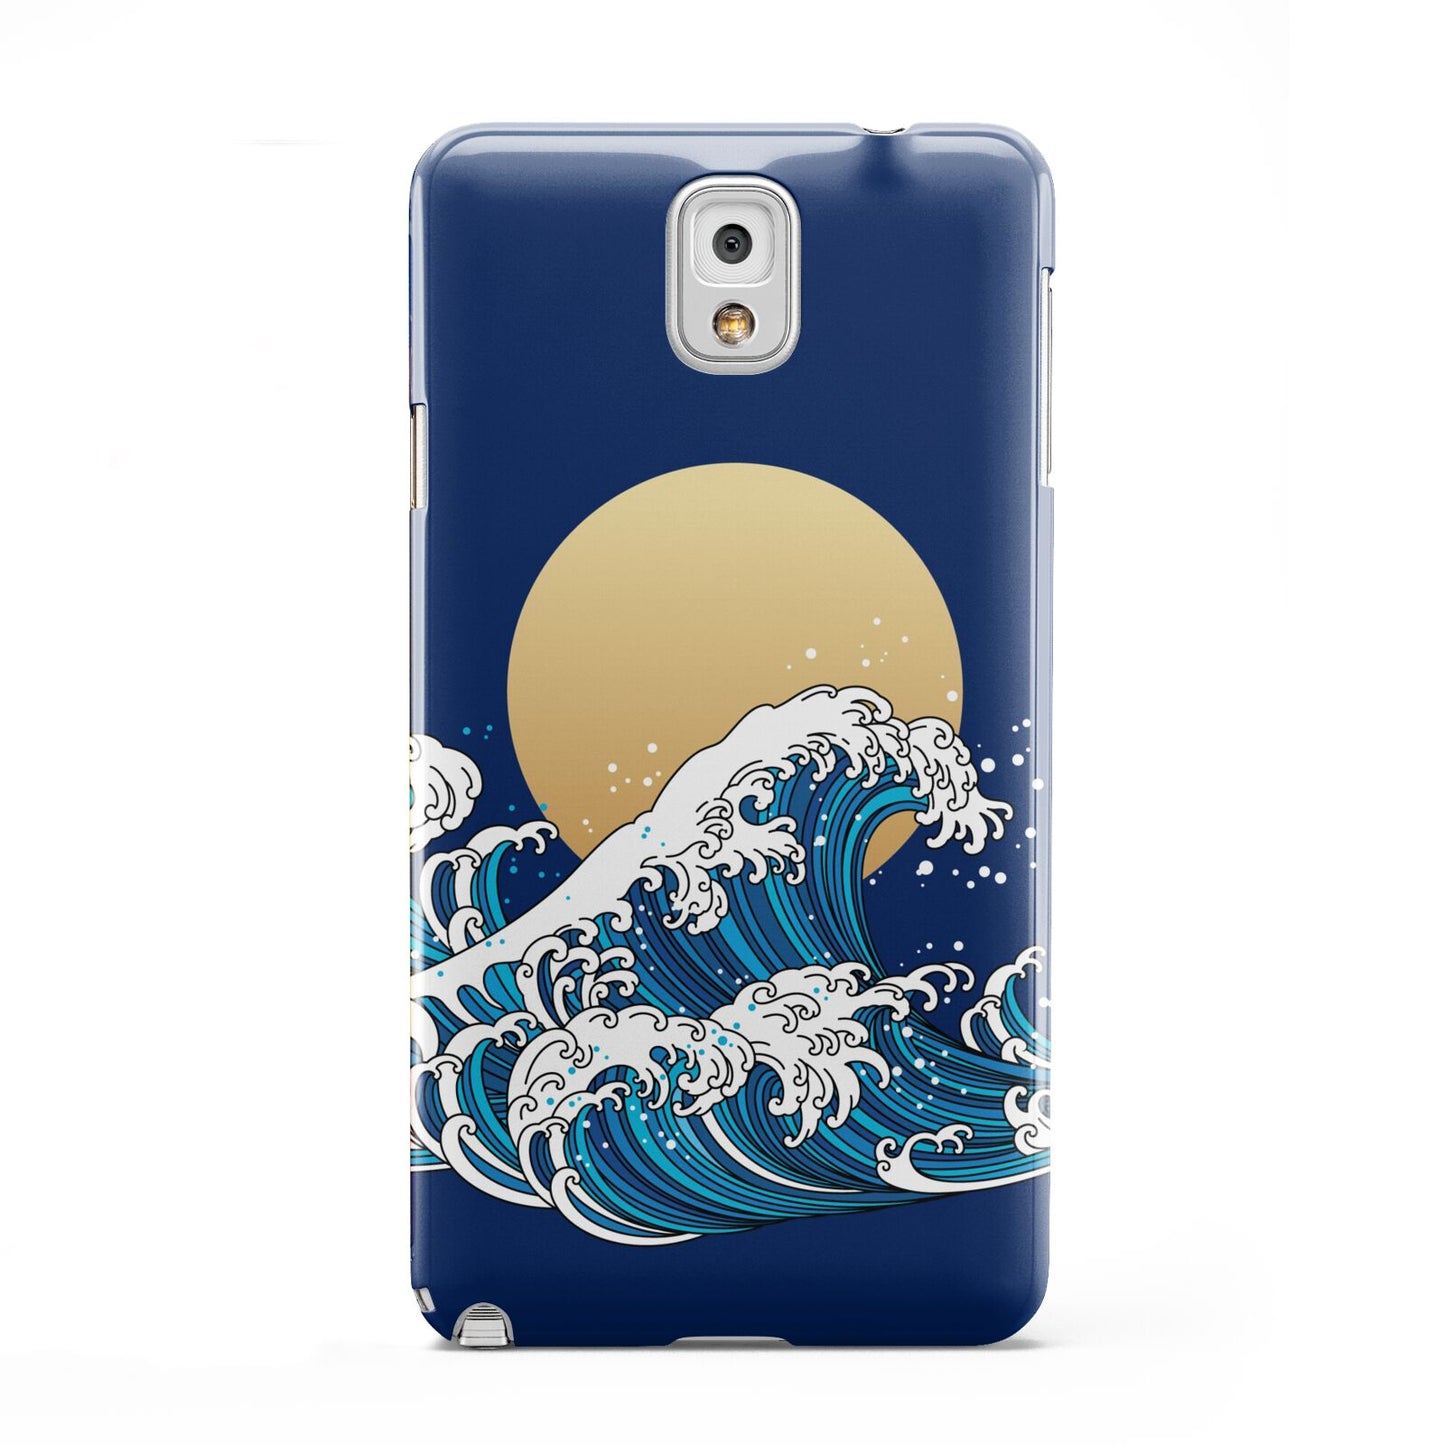 Hokusai Japanese Waves Samsung Galaxy Note 3 Case